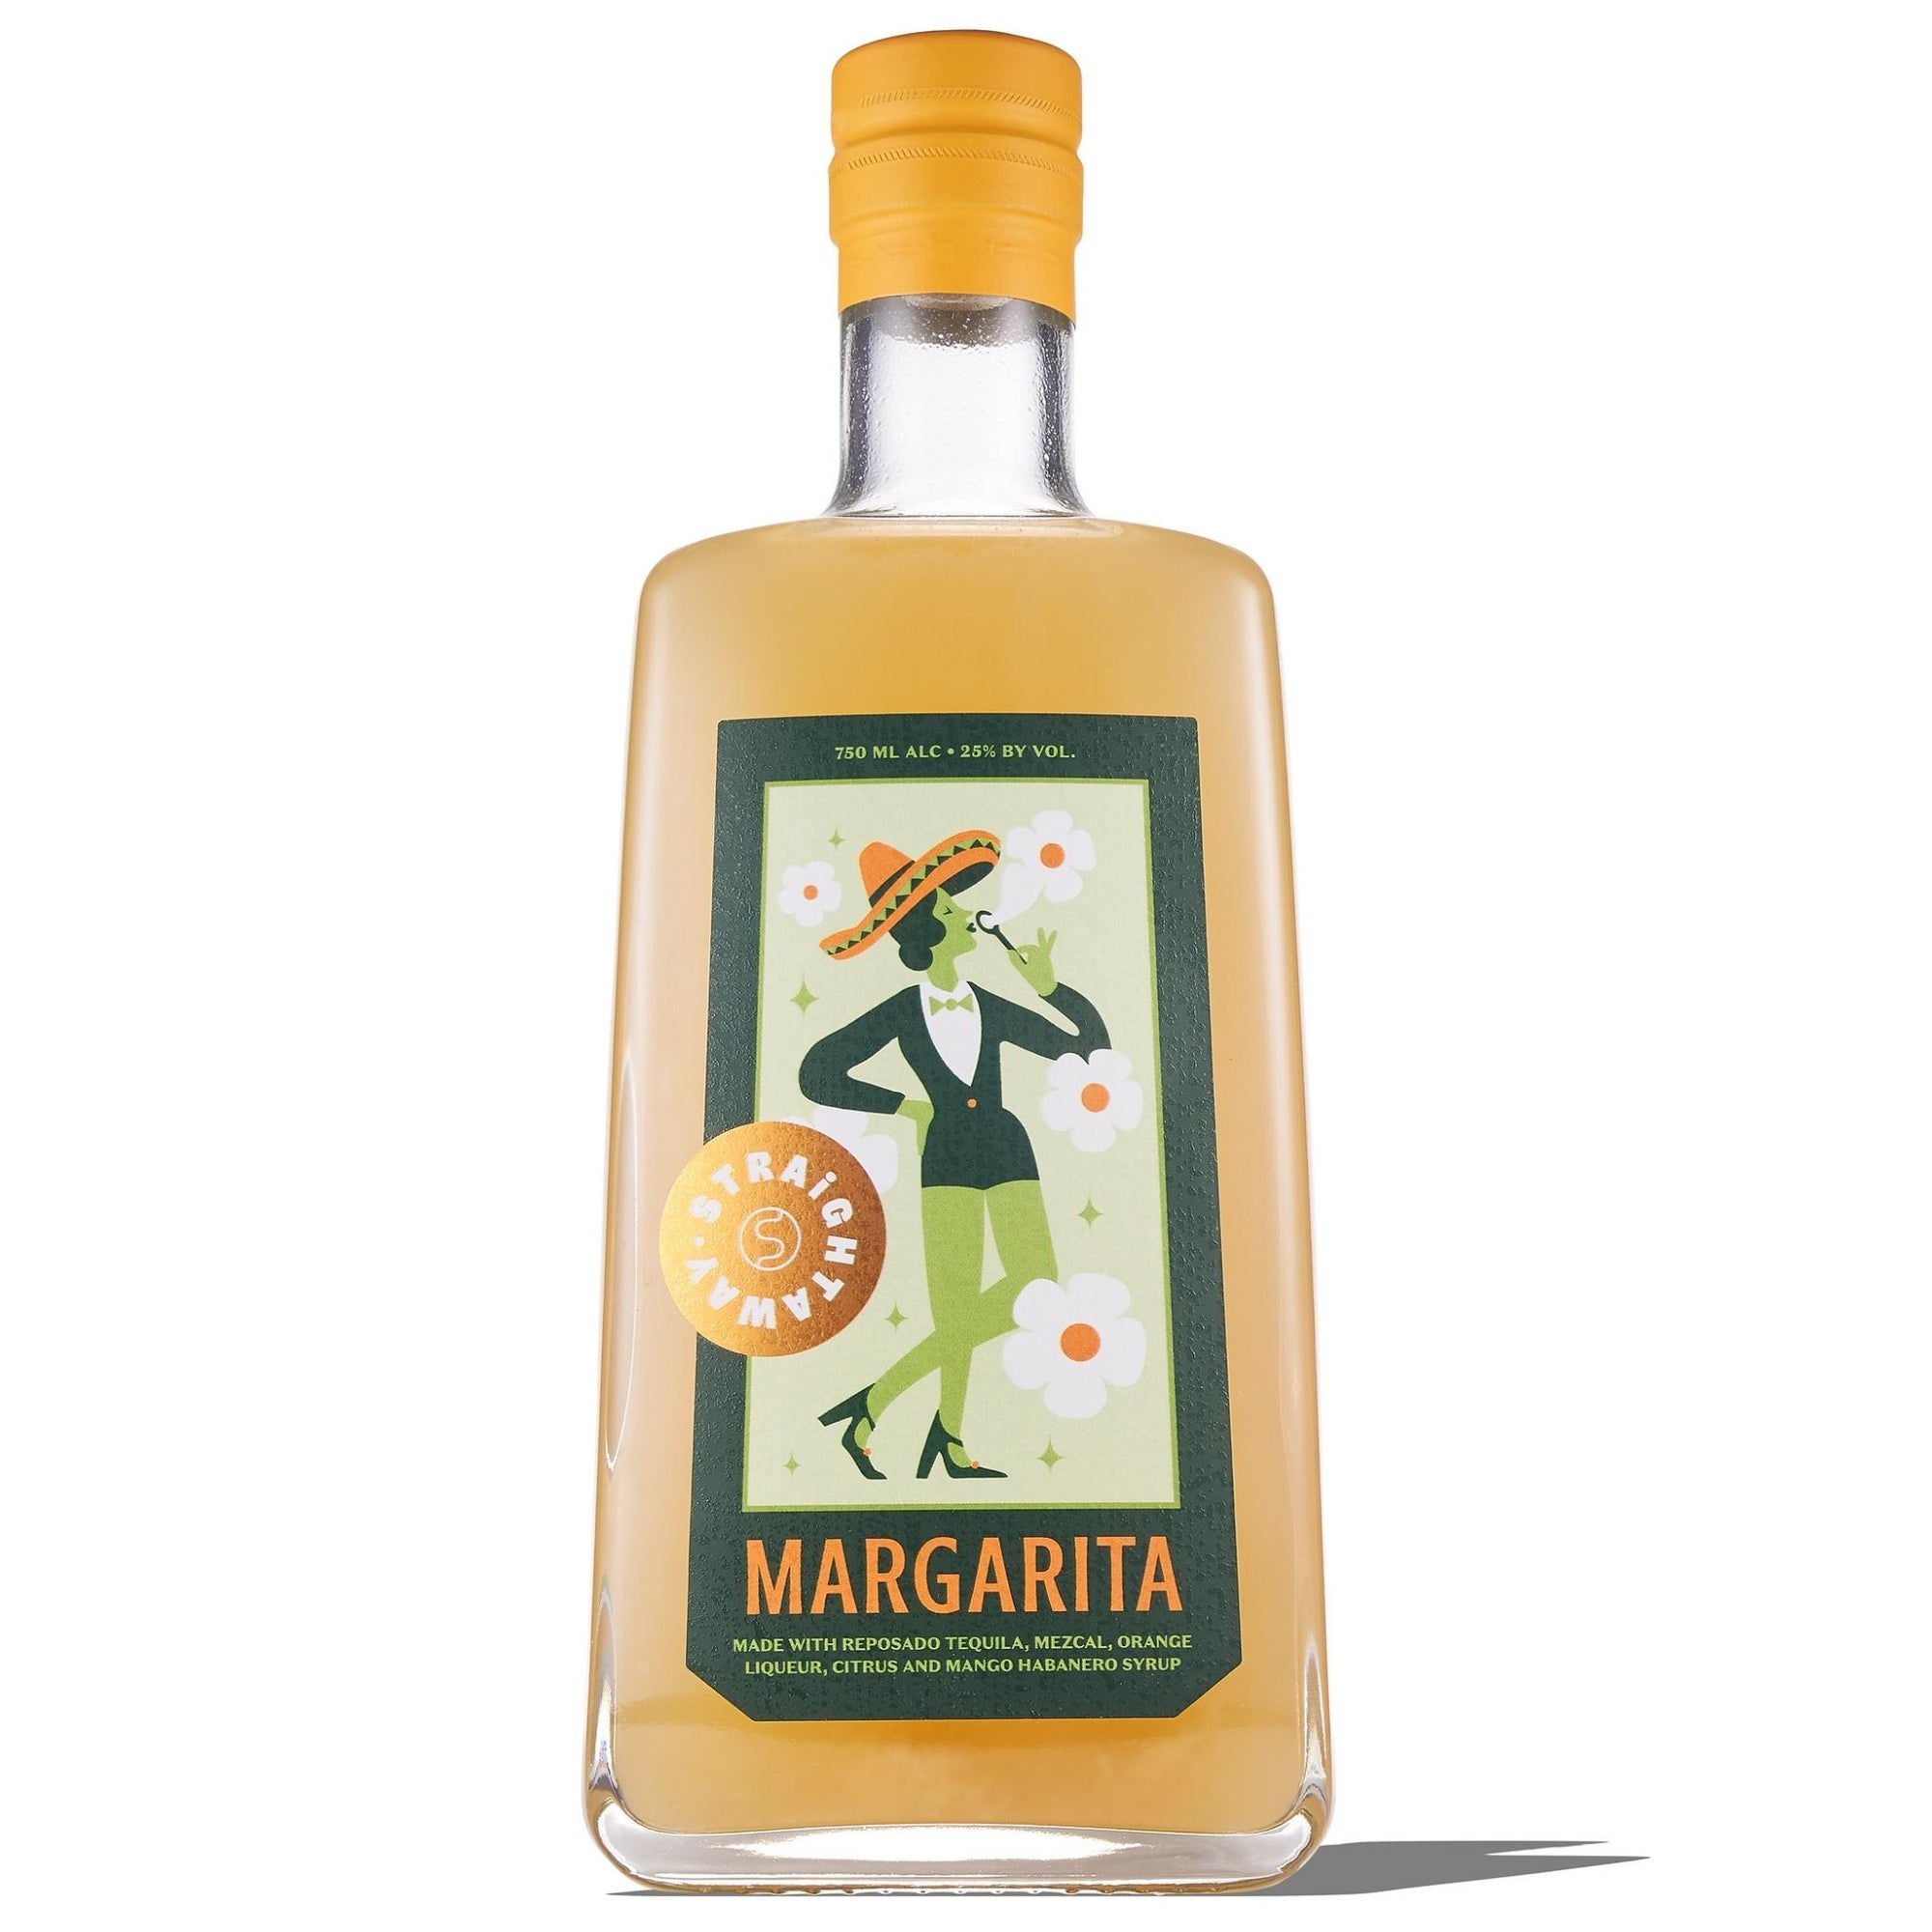 Straightaway Margarita